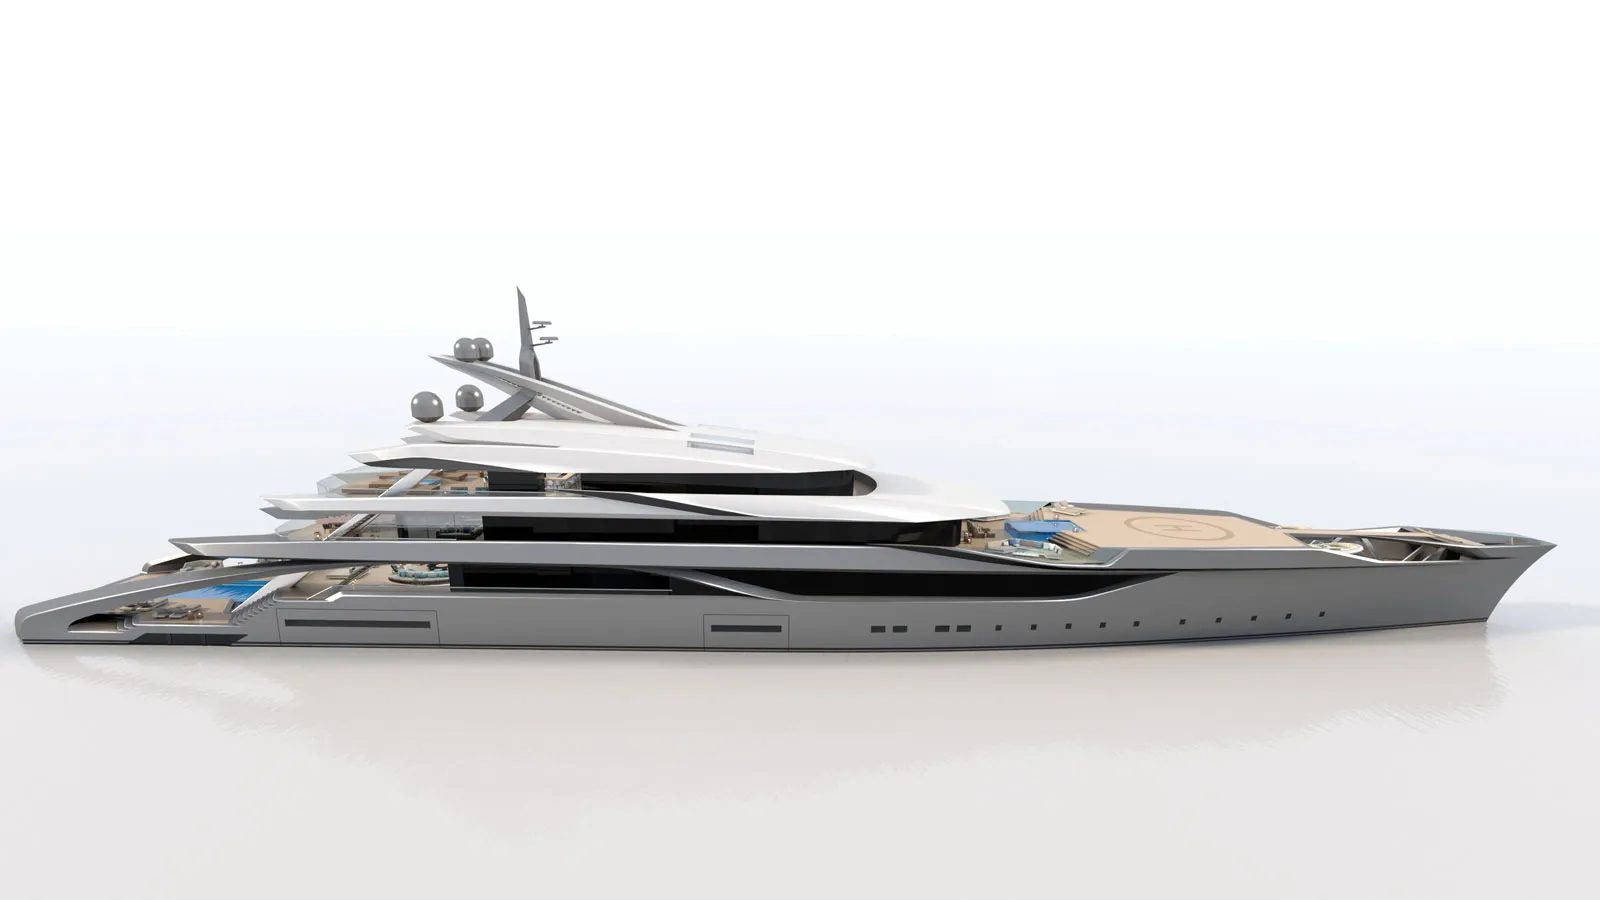 superyacht conceito kappa - boat shopping